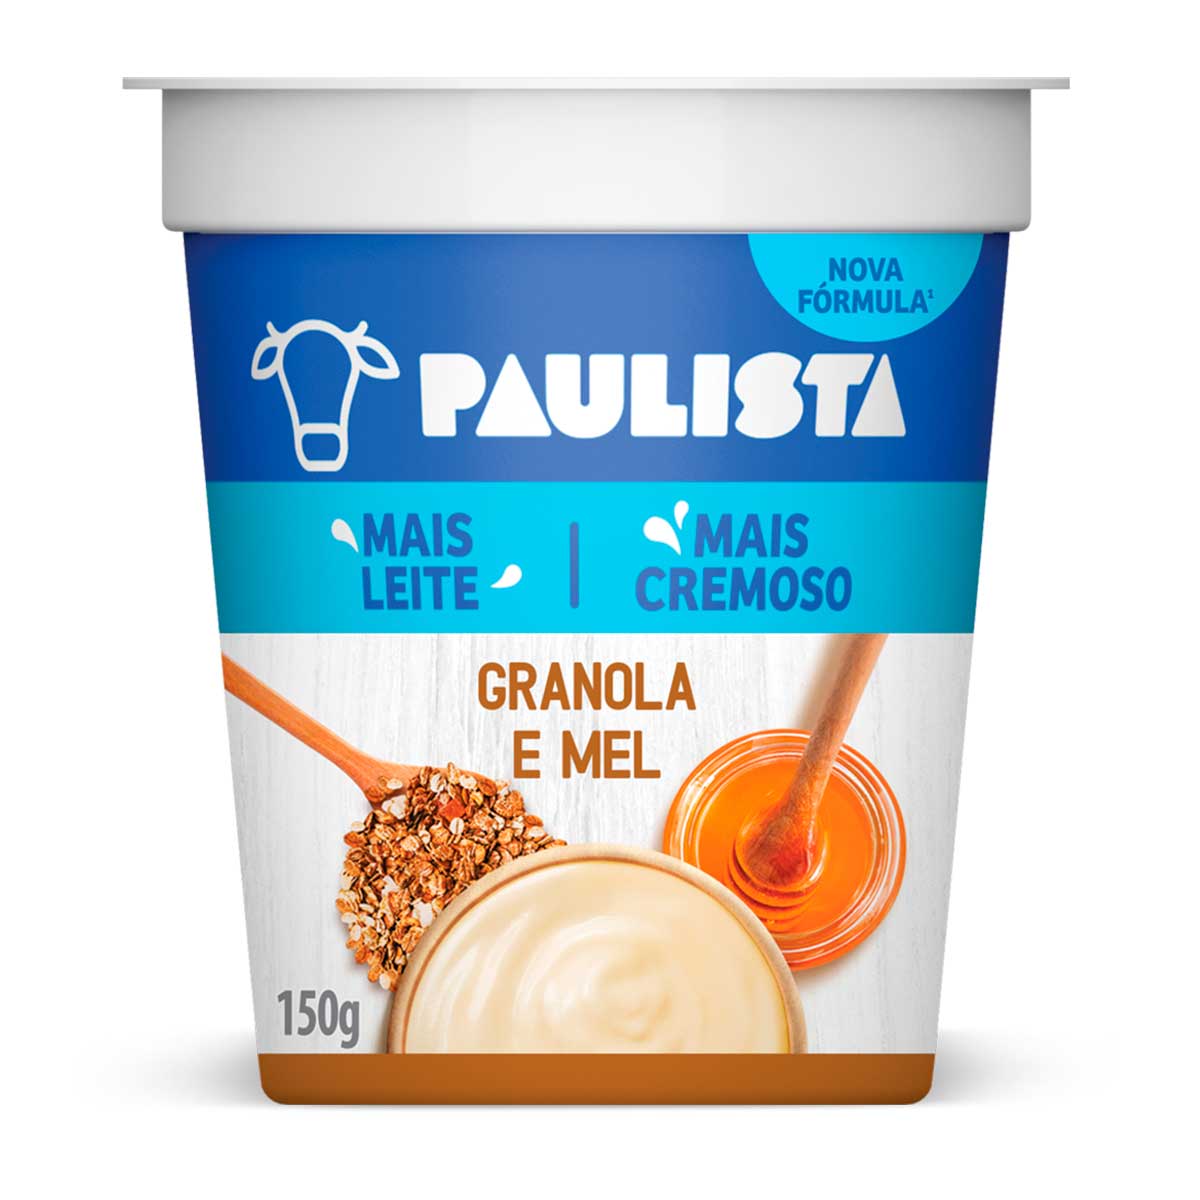 iog-liq-paulista-mel-granola-150g-1.jpg